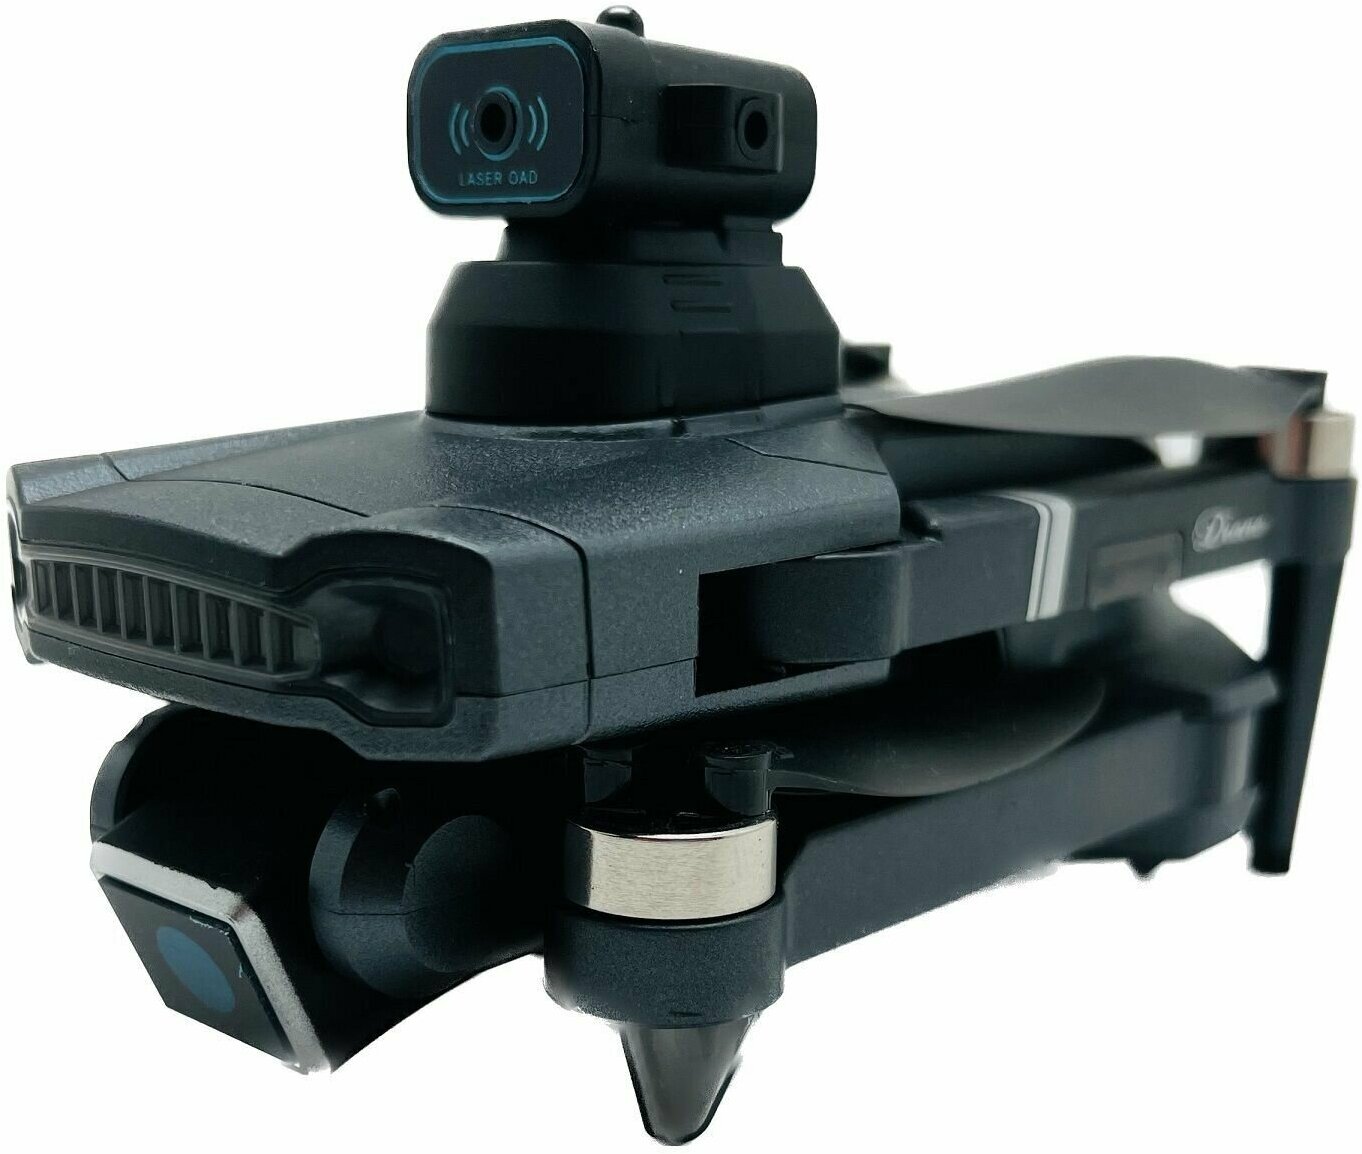 Дрон квадрокоптер S179  HD Gimbal камерой FPV и лазерной функцией огибания препятствий